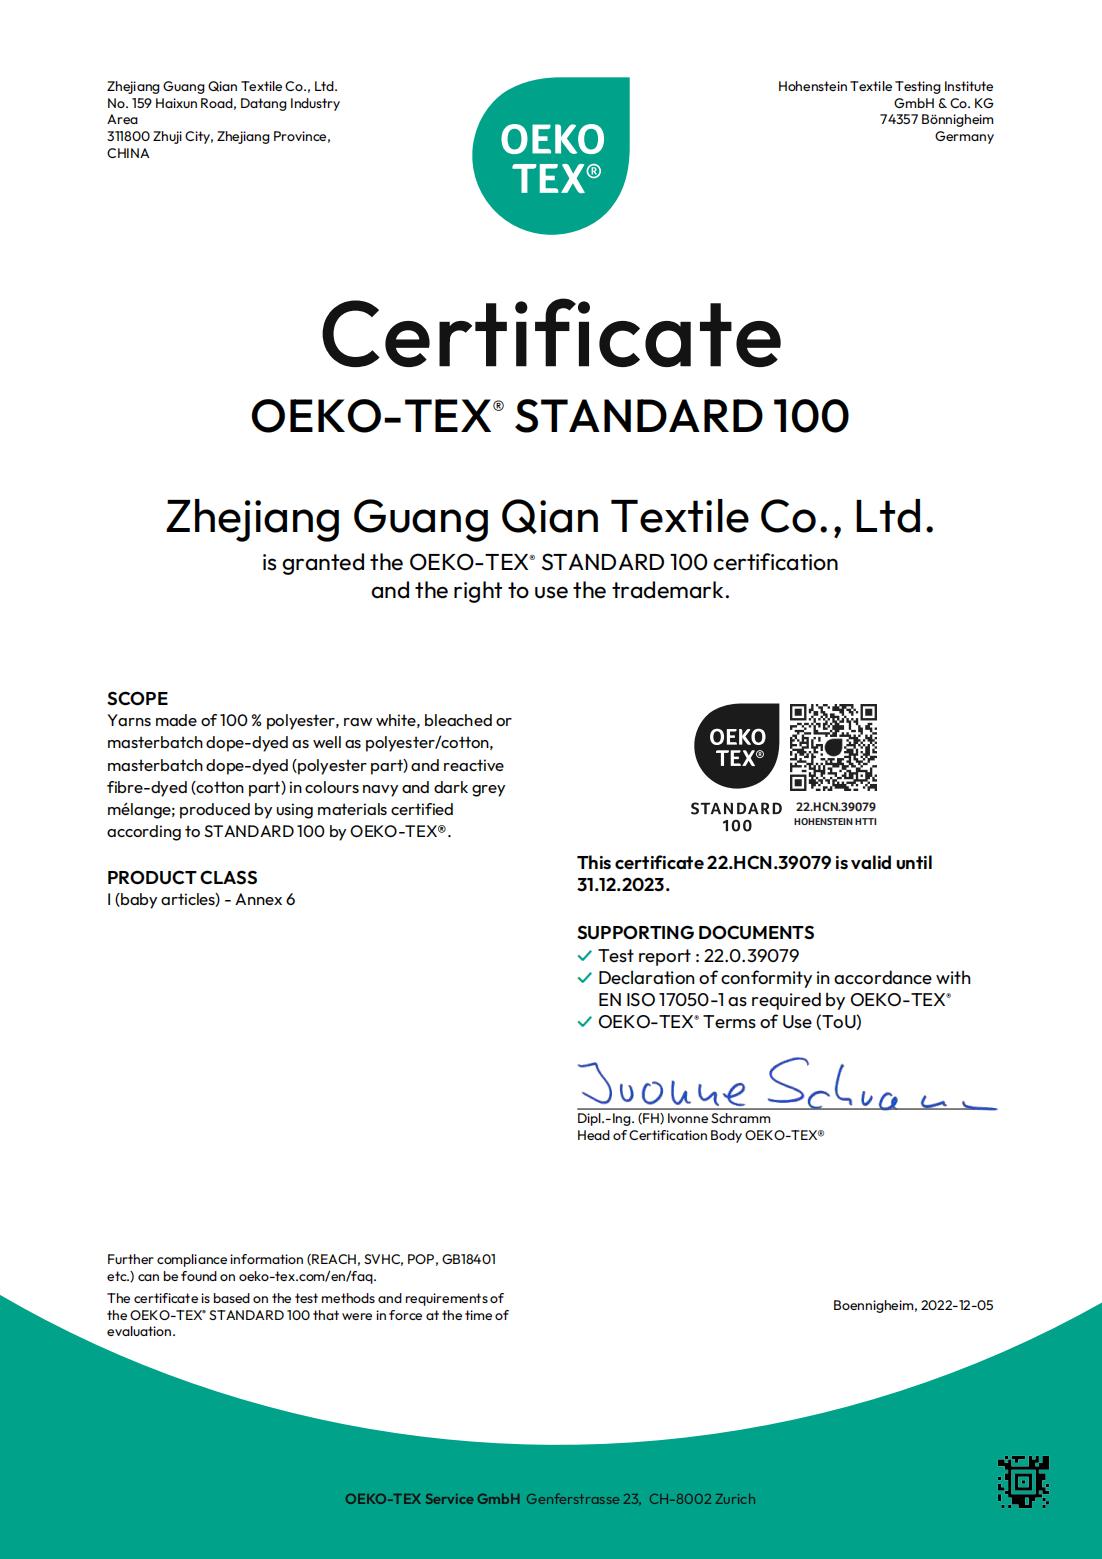 Global OEKO-TEX Certificate